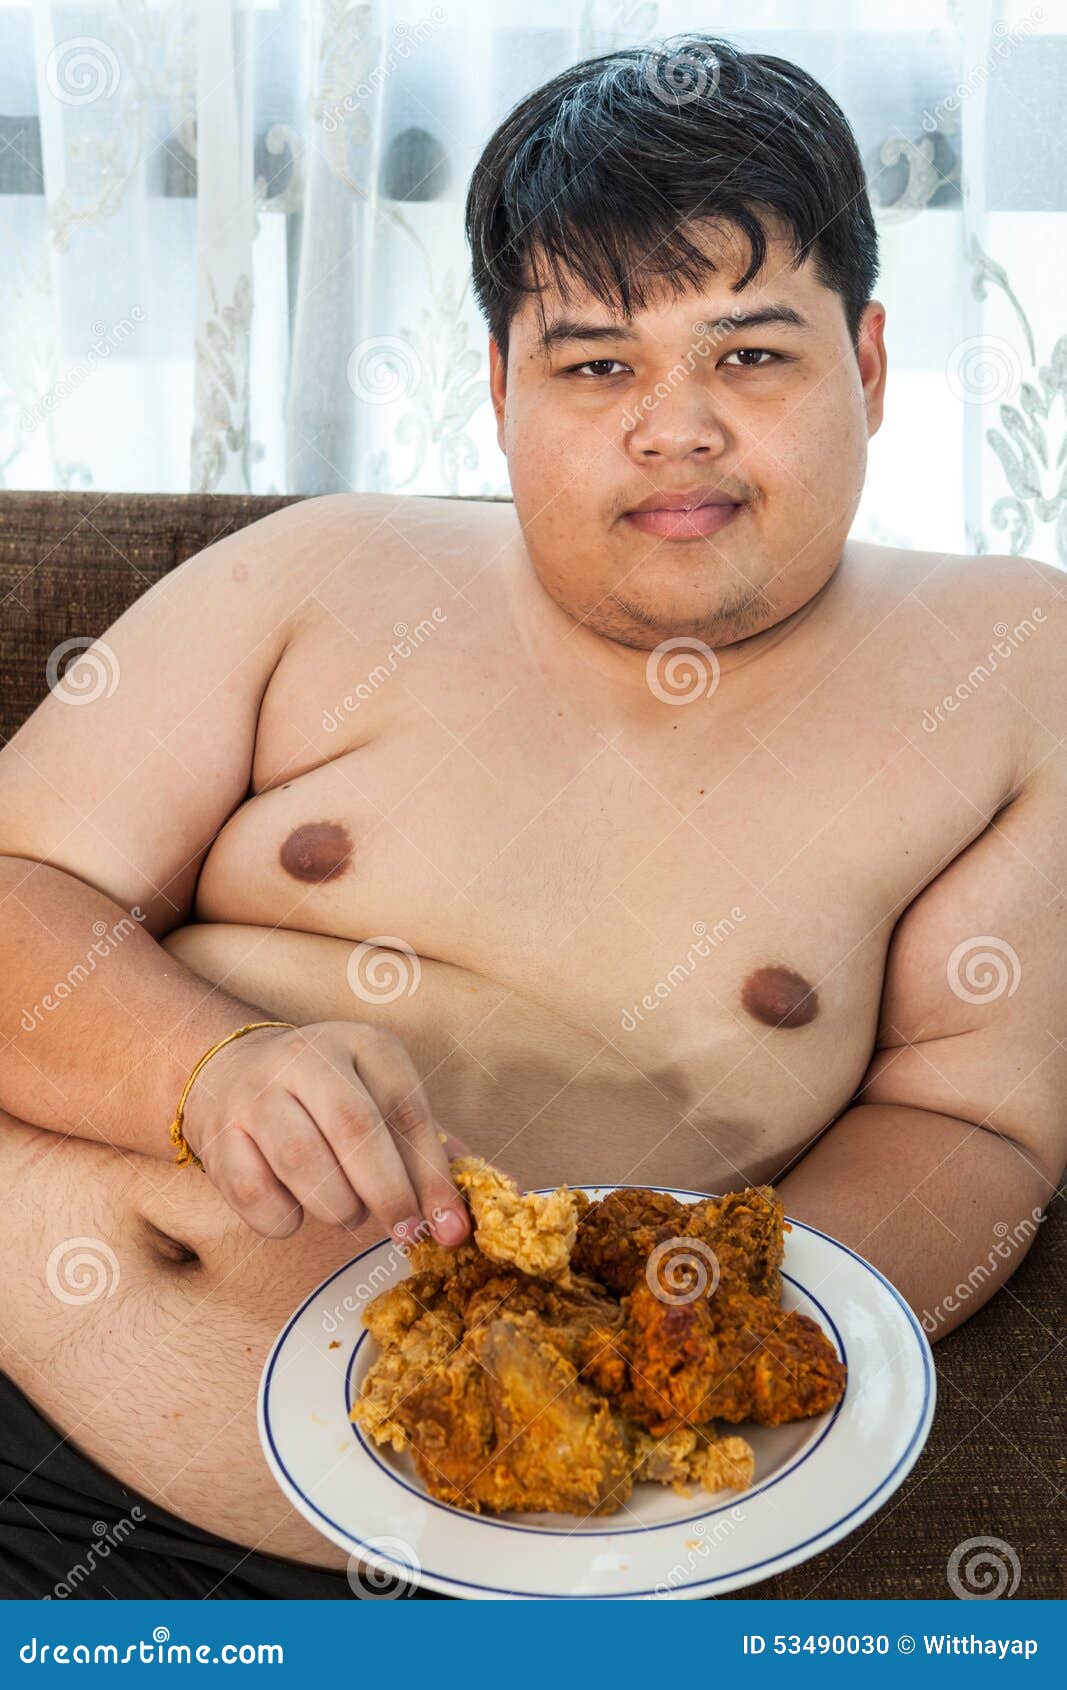 Fat Asian Pic 83